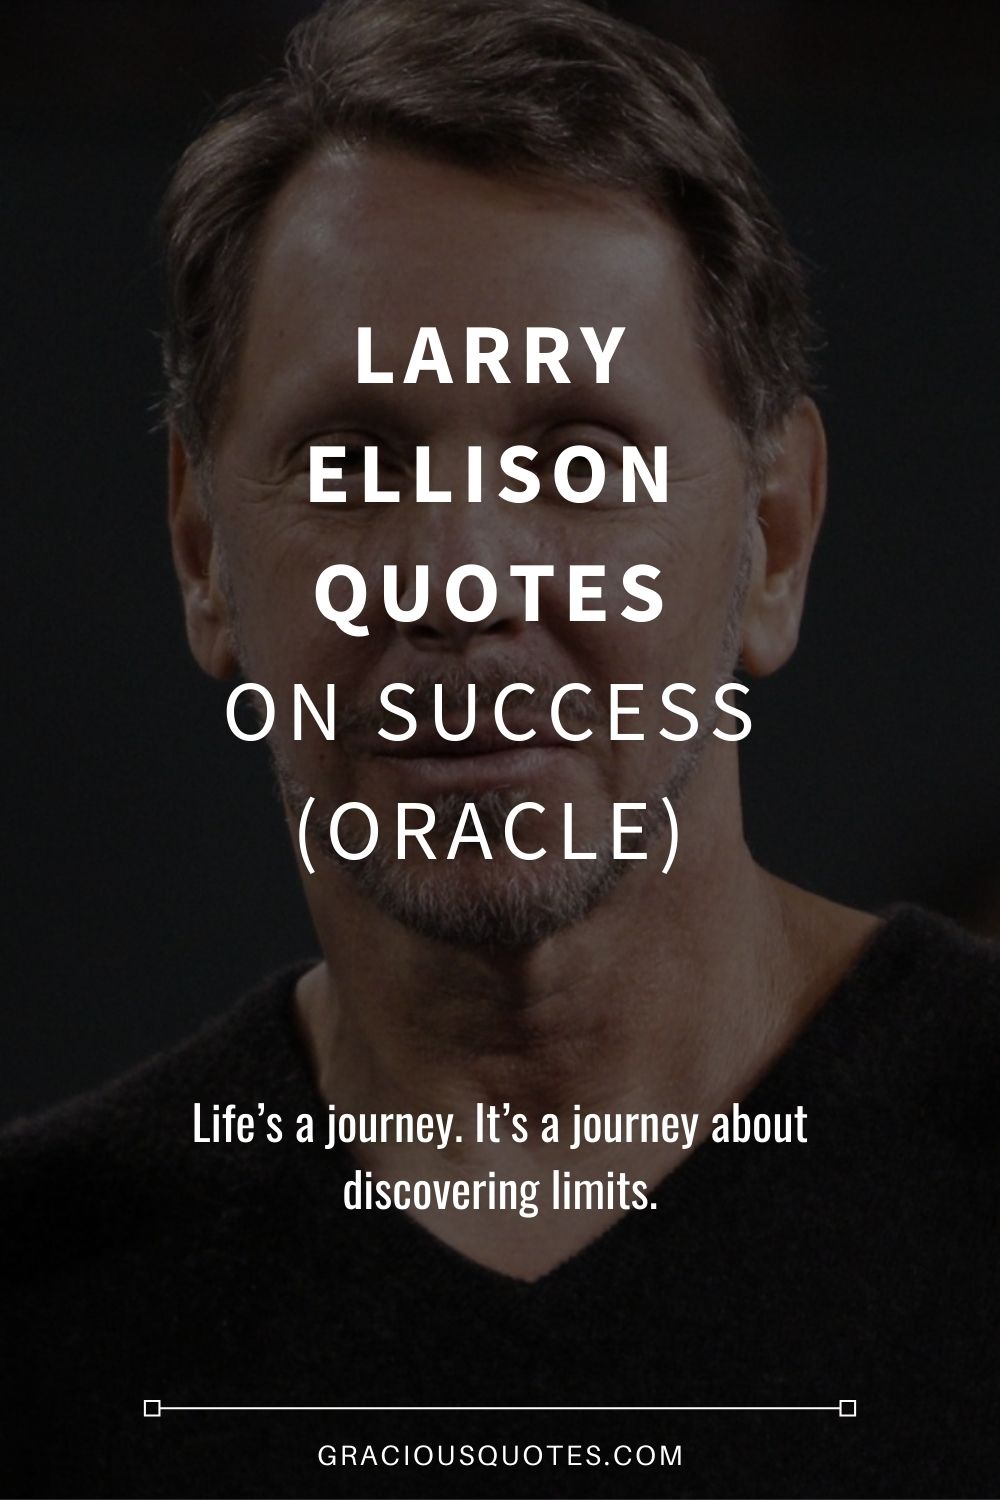 Larry Ellison Quotes on Success (ORACLE) - Gracious Quotes